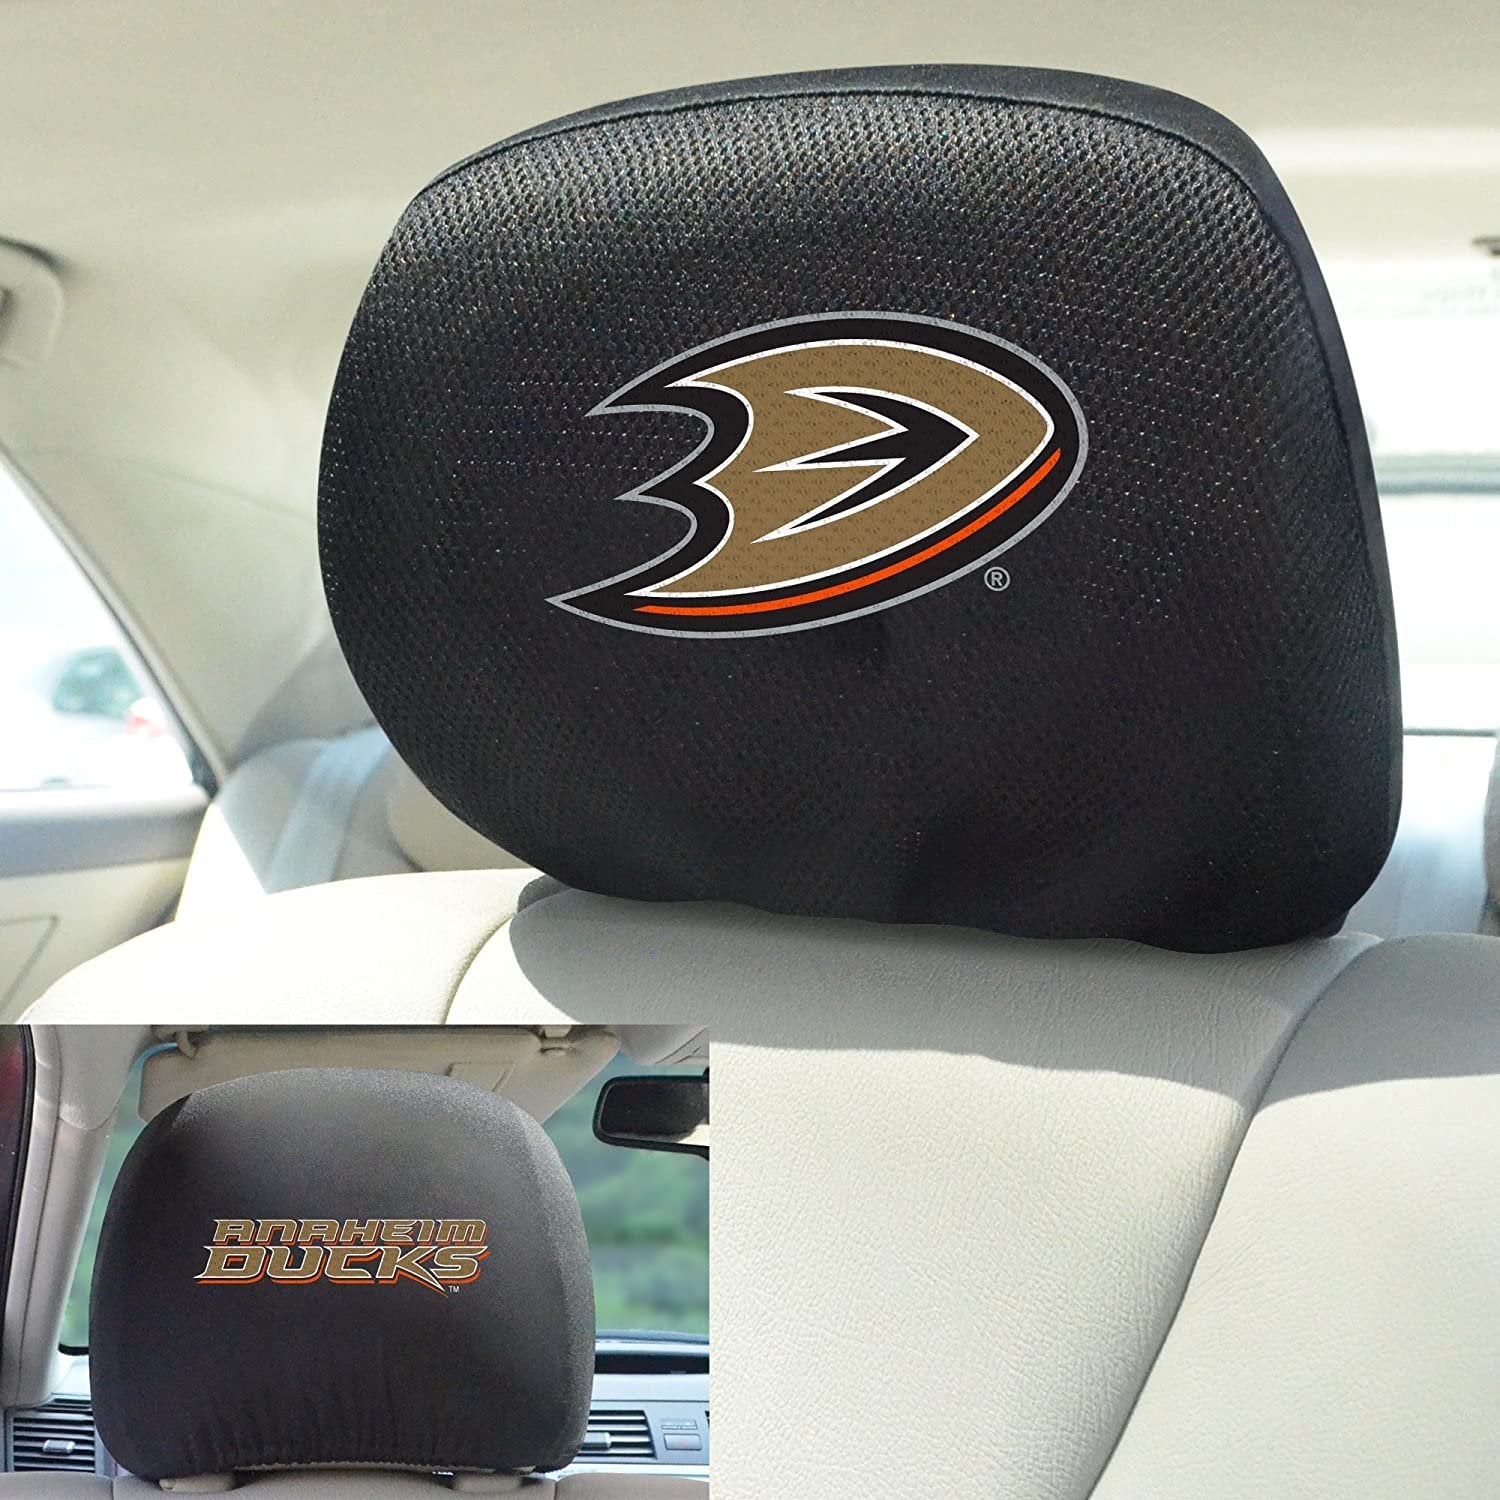 Anaheim Ducks Pair of Premium Auto Head Rest Covers, Embroidered, Black Elastic, 14x10 Inch